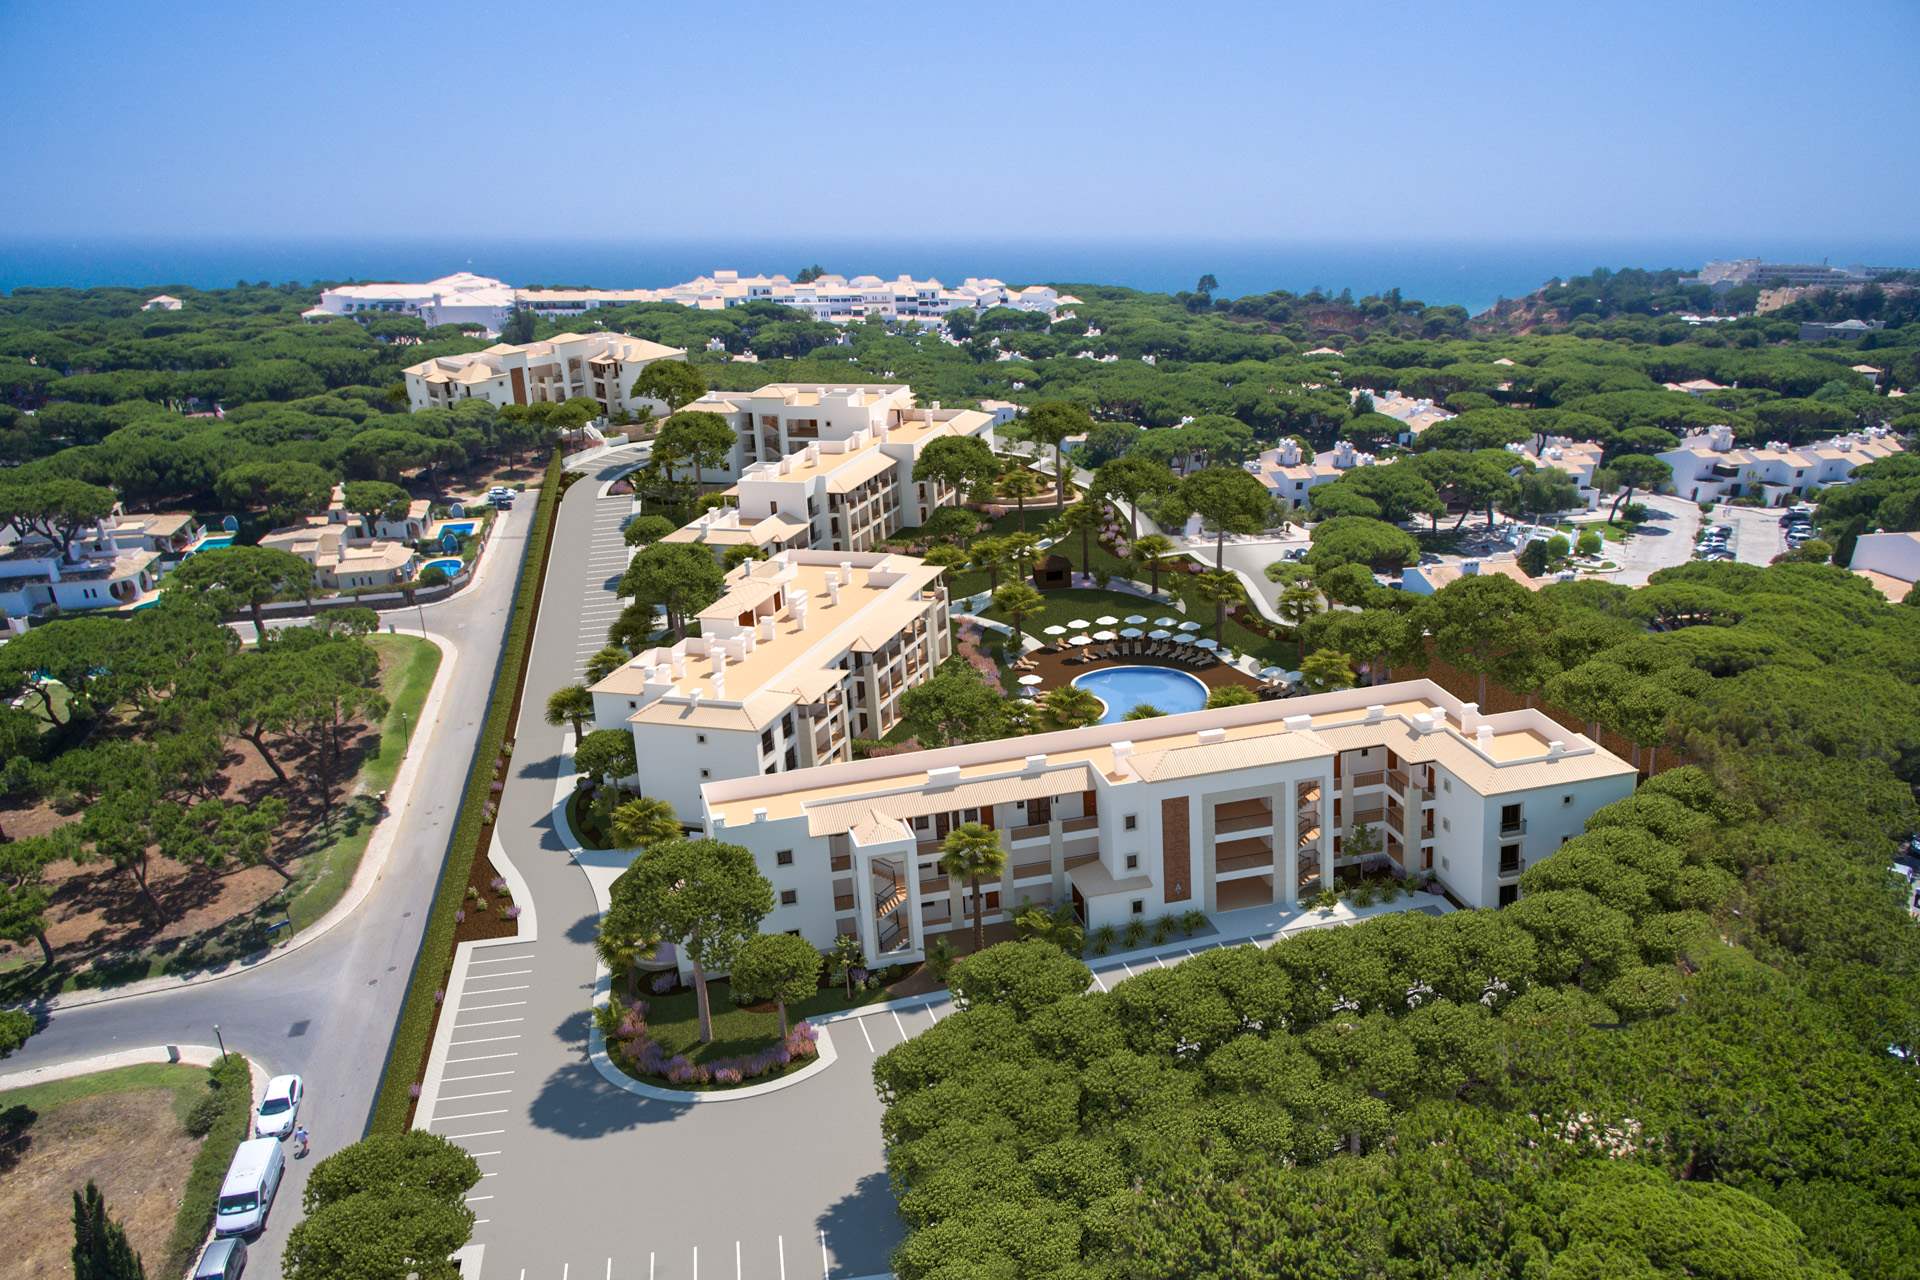 Pine Cliffs Gardens, Three Bedroom Suite, S/C Basis, 3 bedroom apartment in Pine Cliffs Resort, Algarve Photo #10